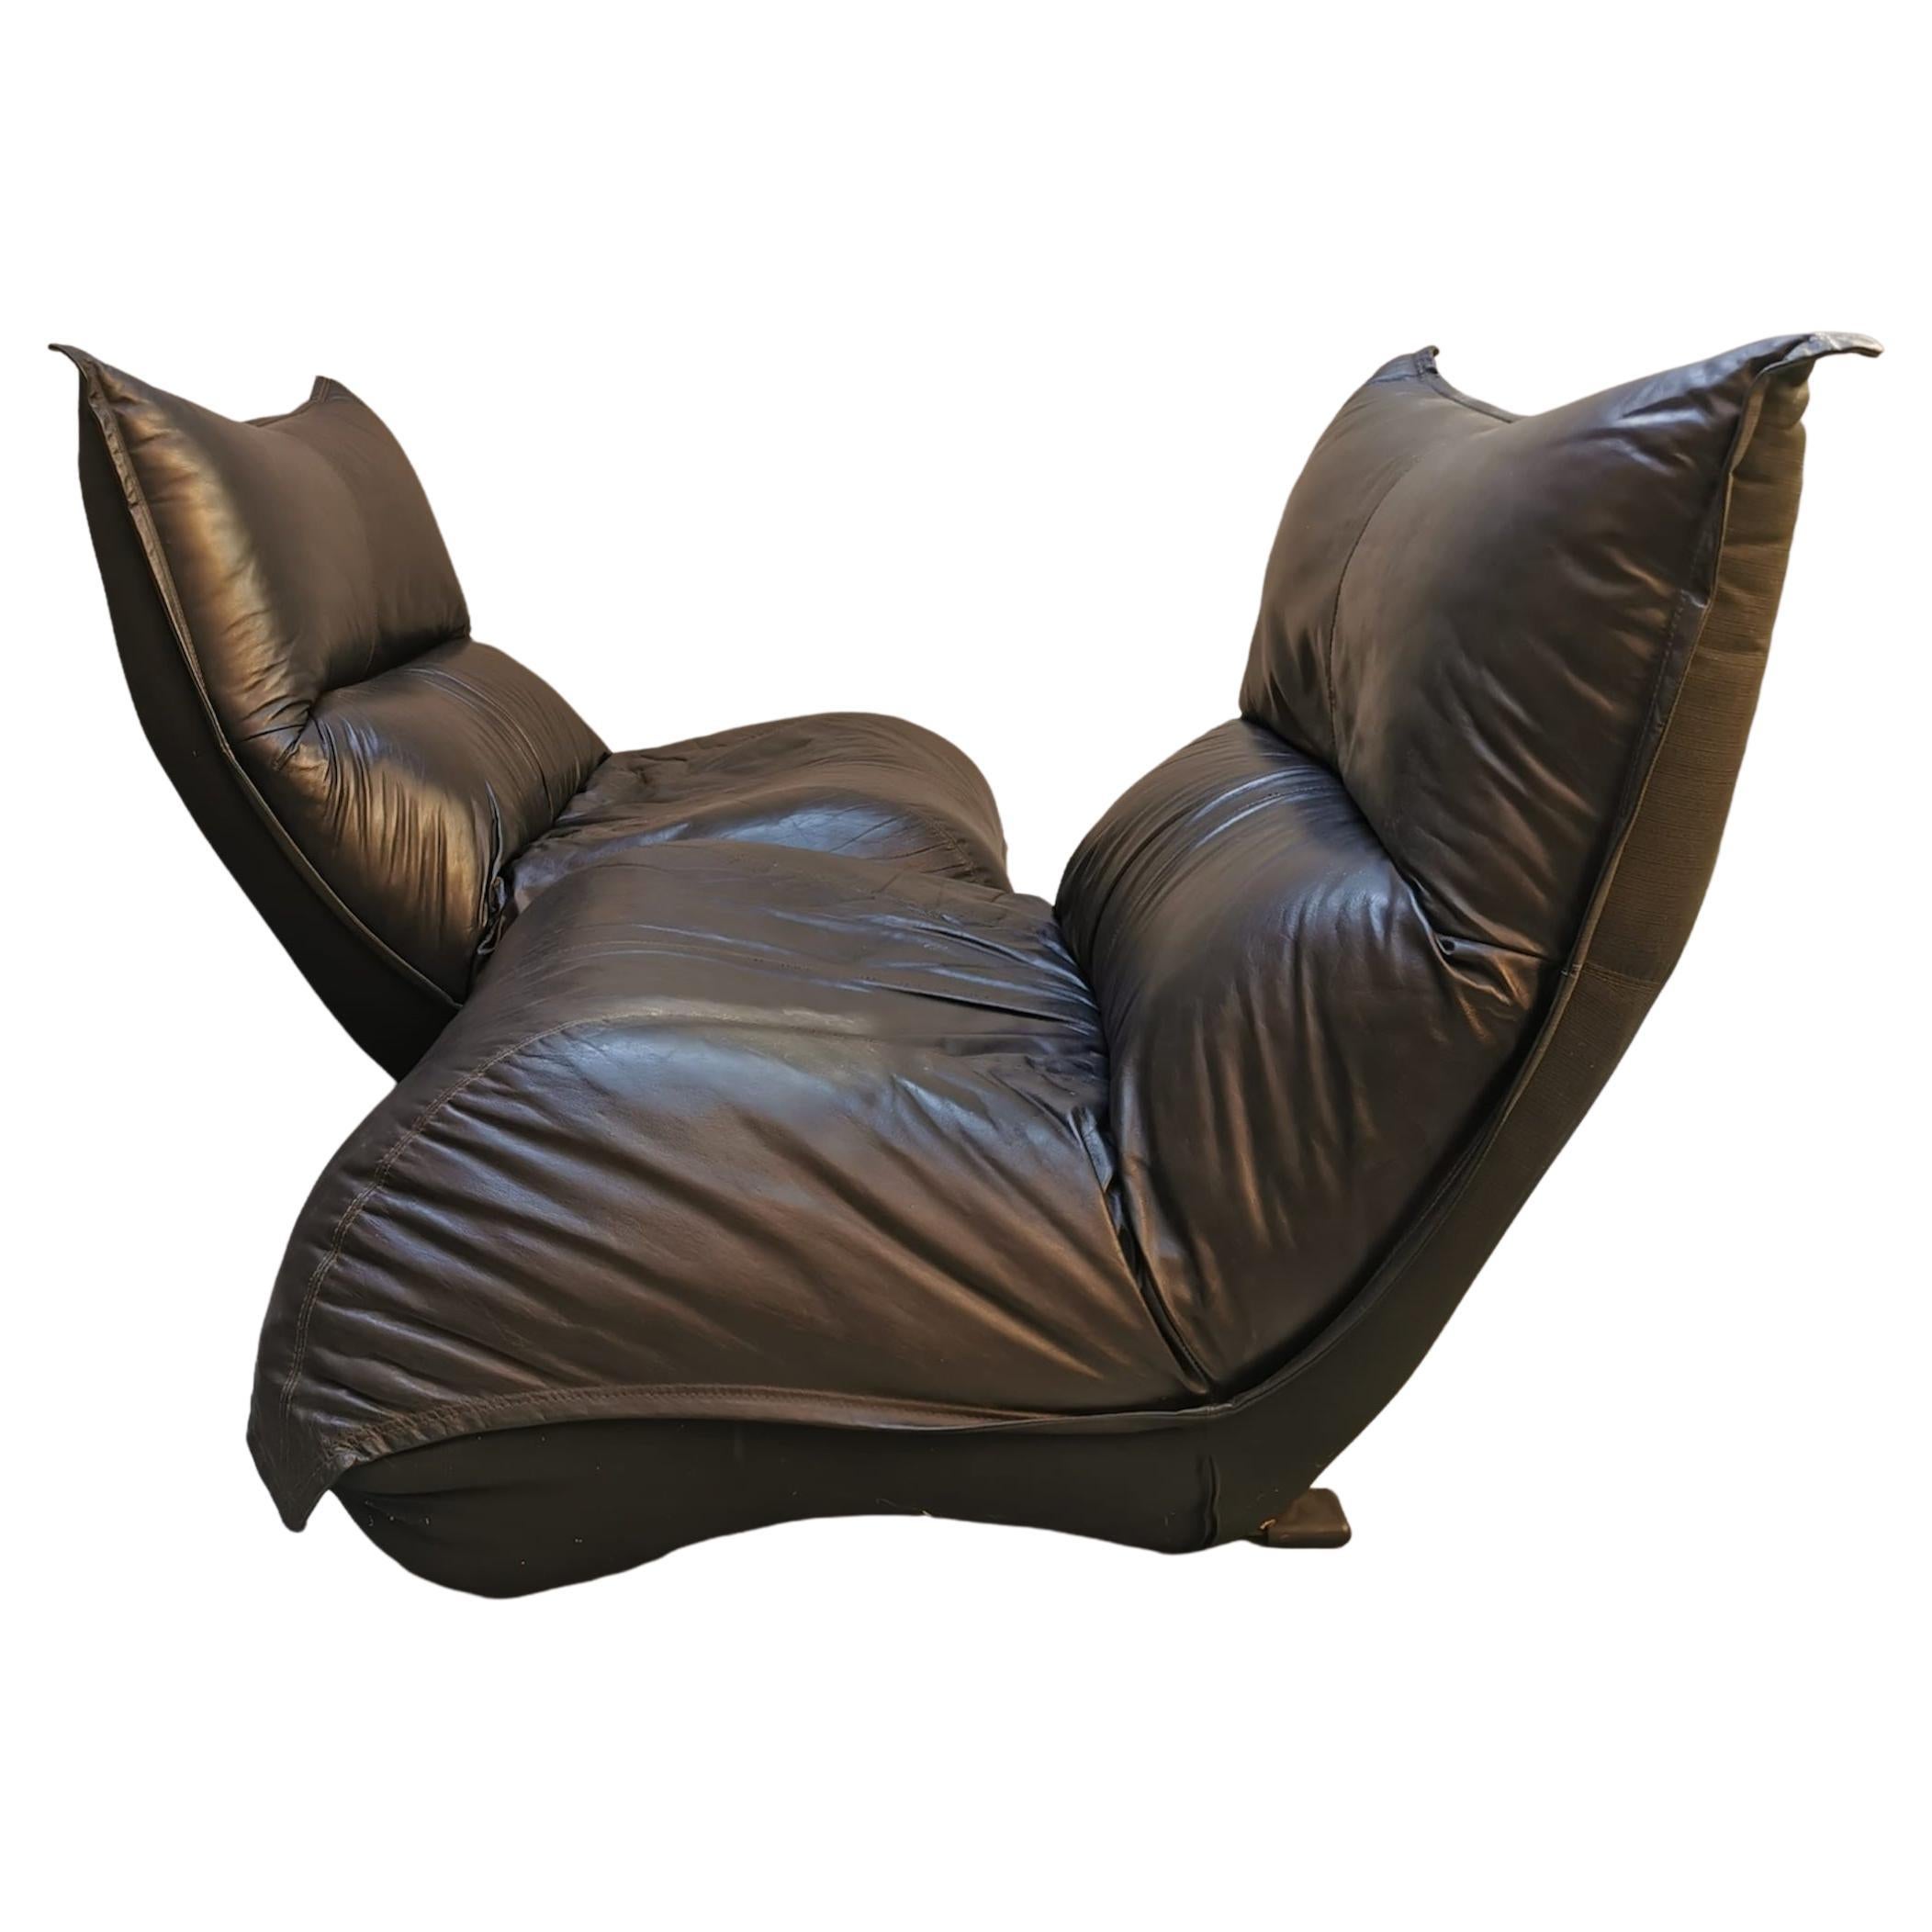 Zinzolo armchair, Vittorio Varo for Plan For Sale